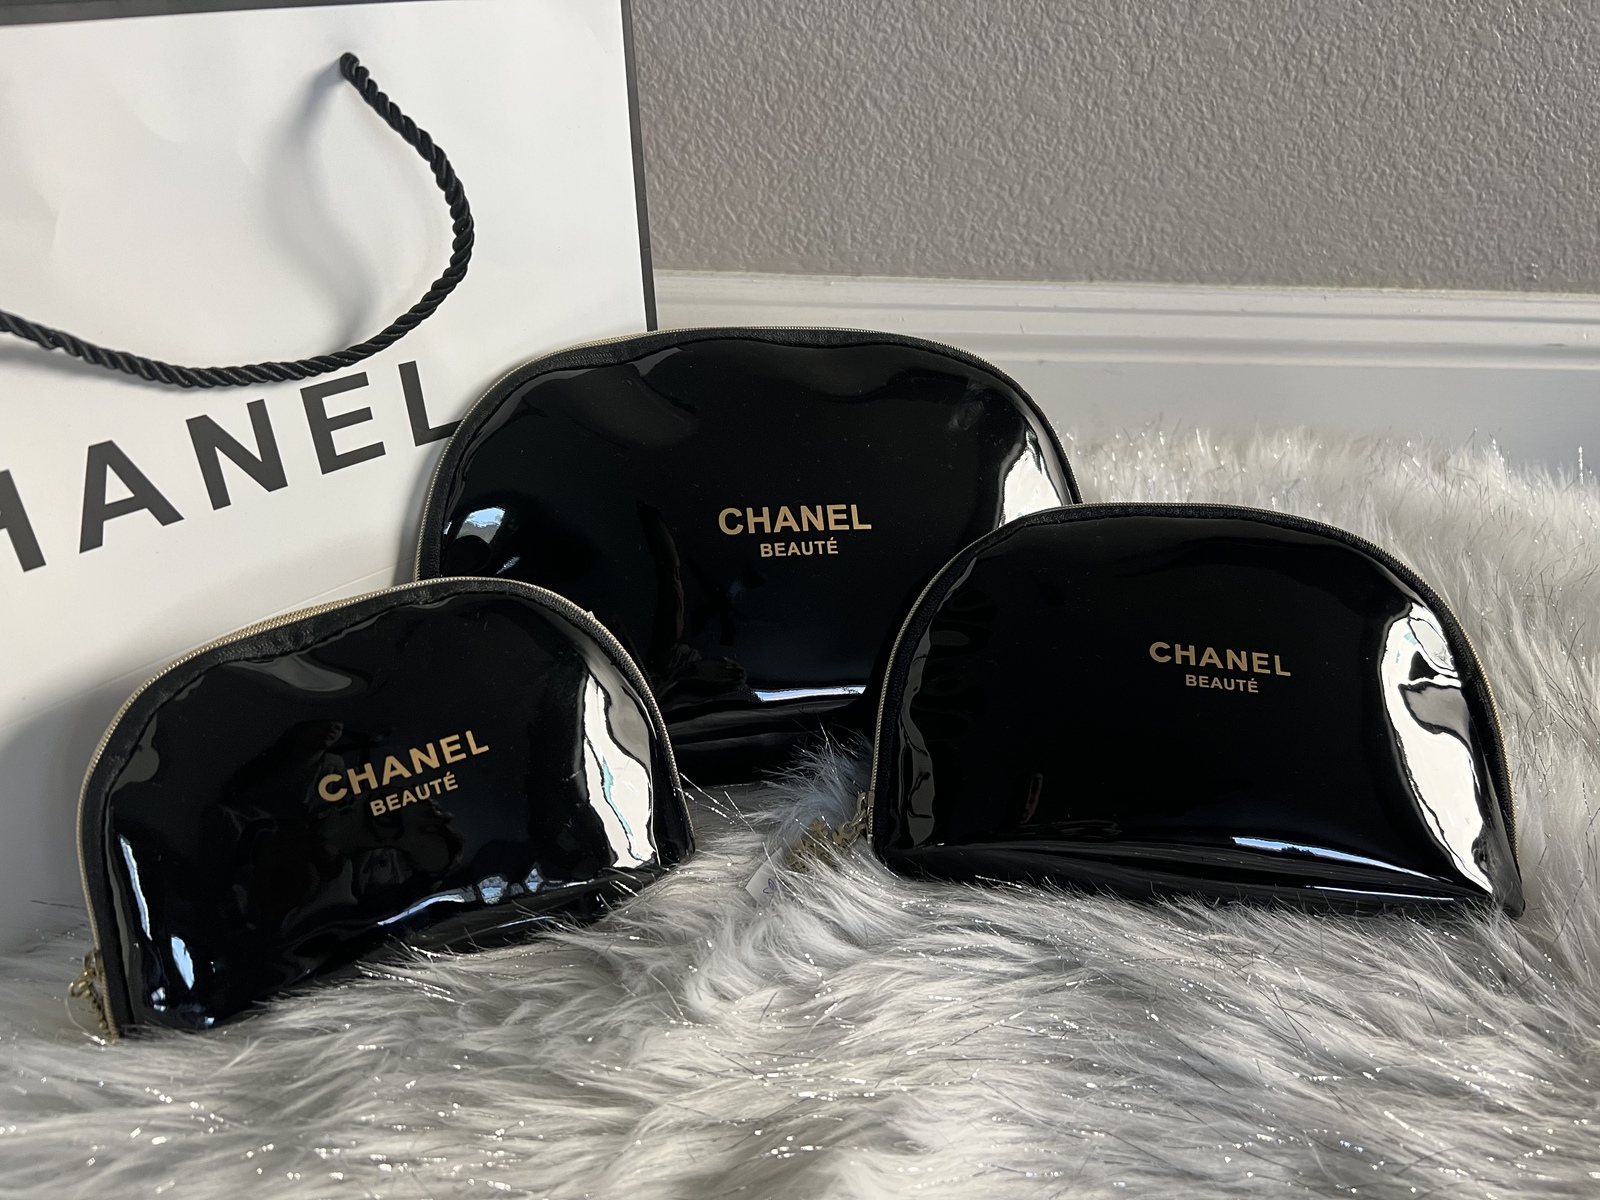 Chanel vip gifts make up bag 3 set  - $150.00